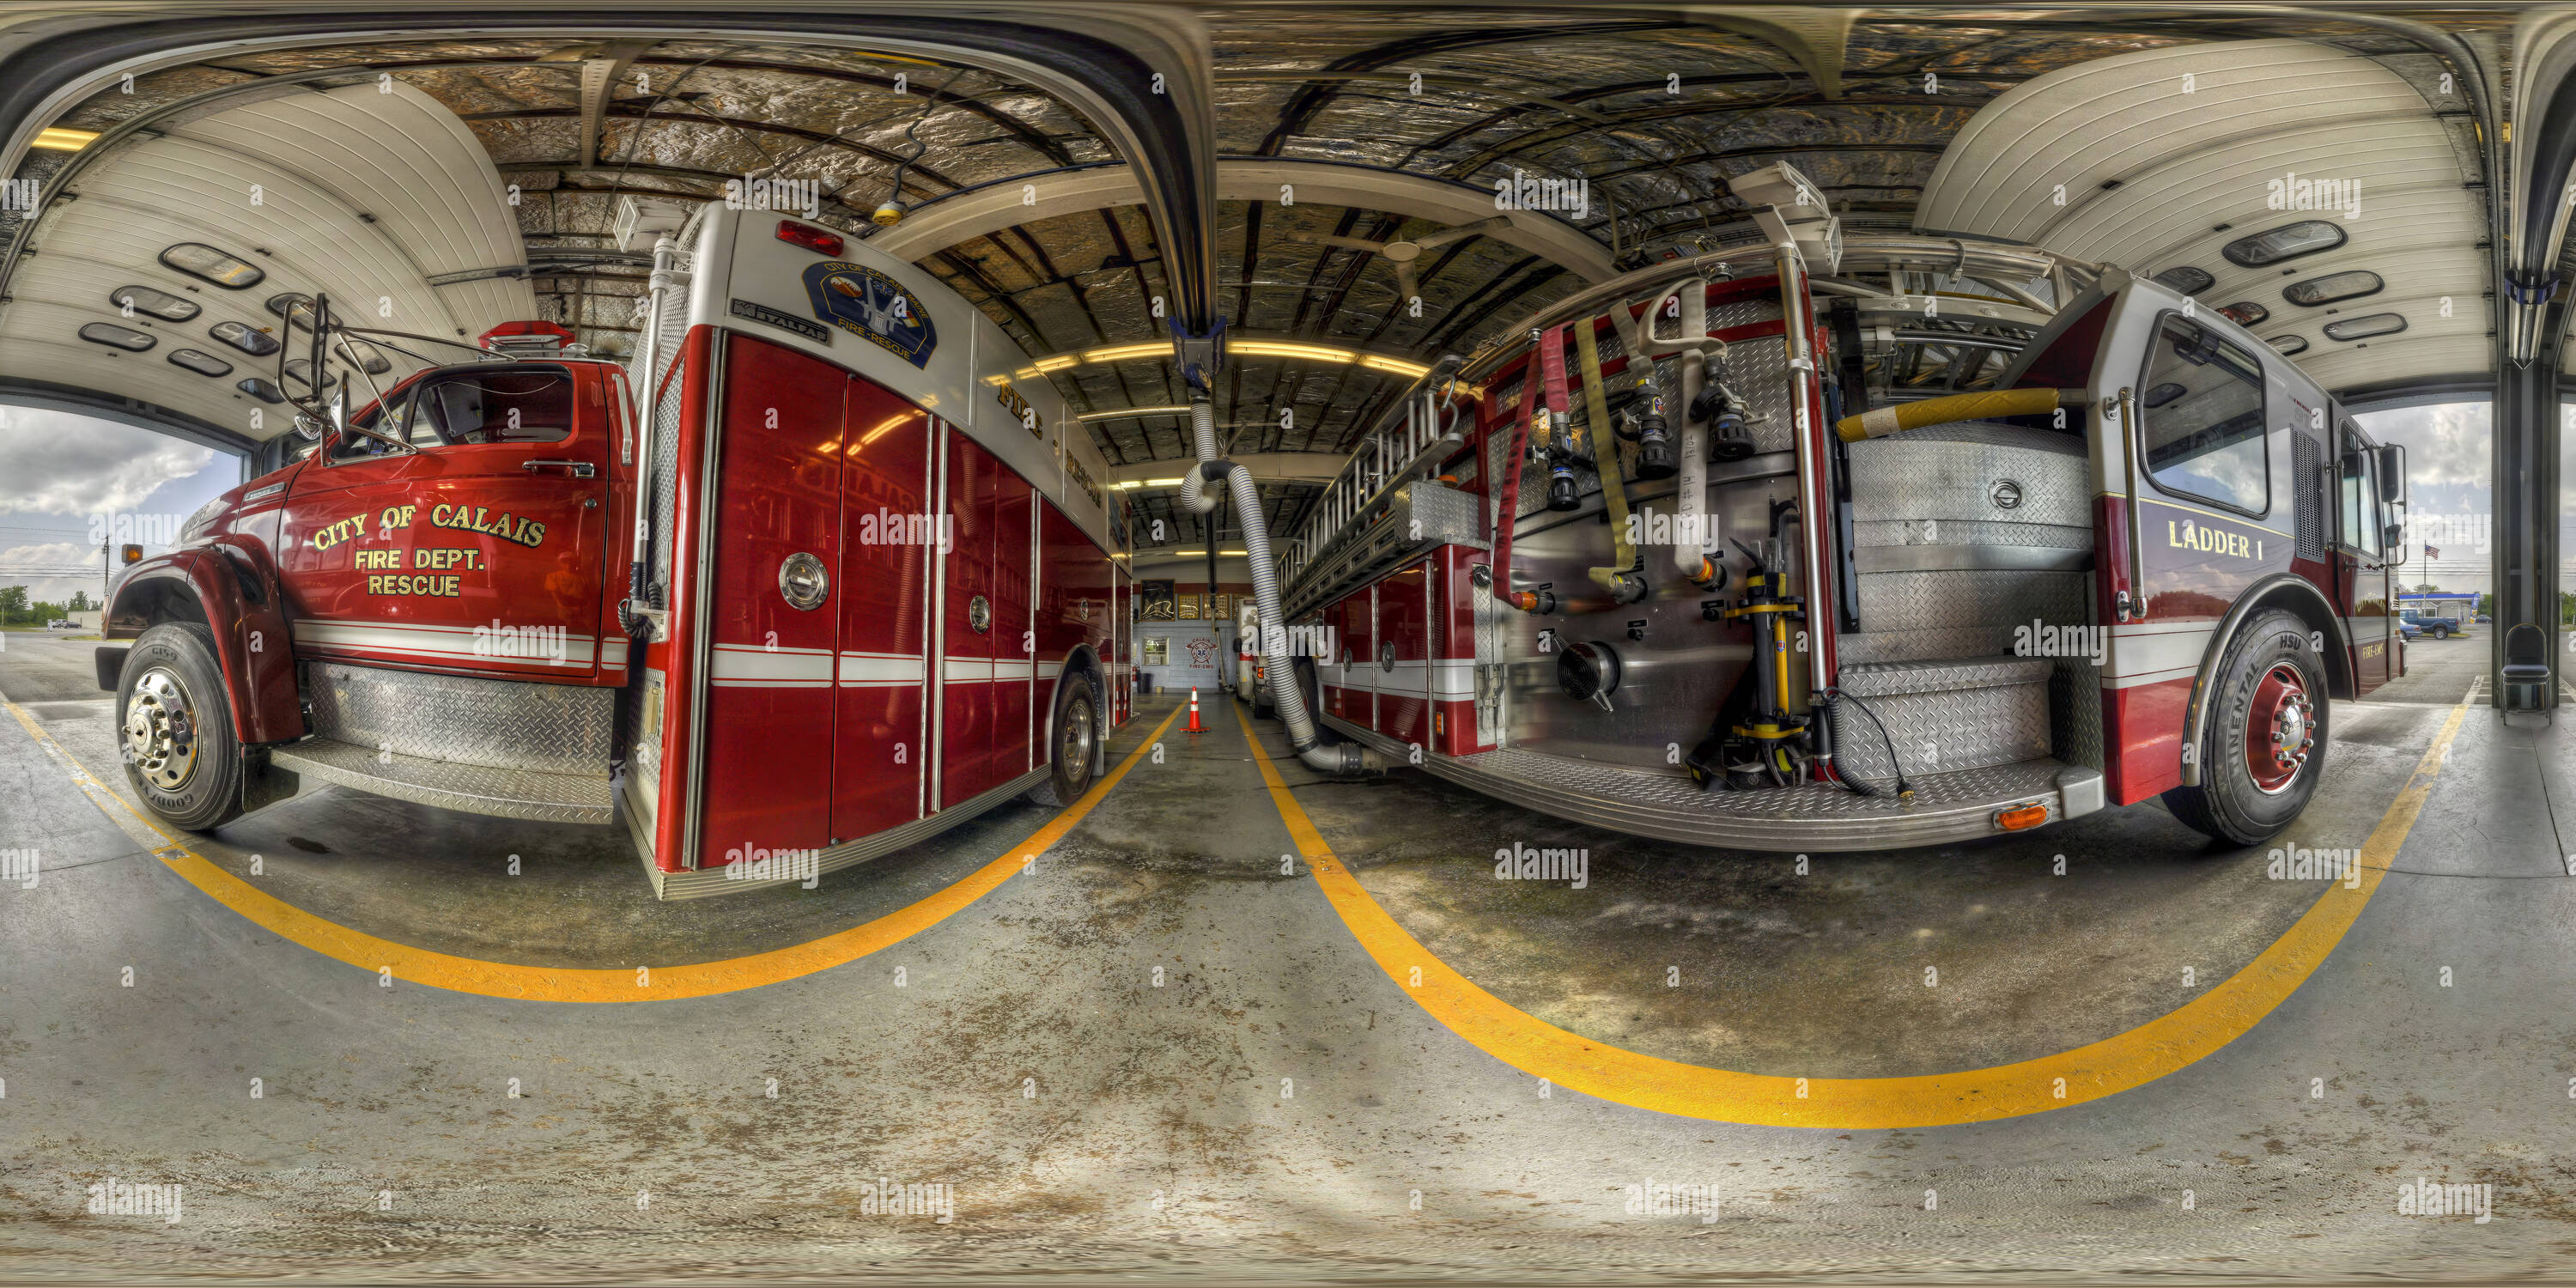 360 degree panoramic view of Calais Fire Department, Calais, Maine